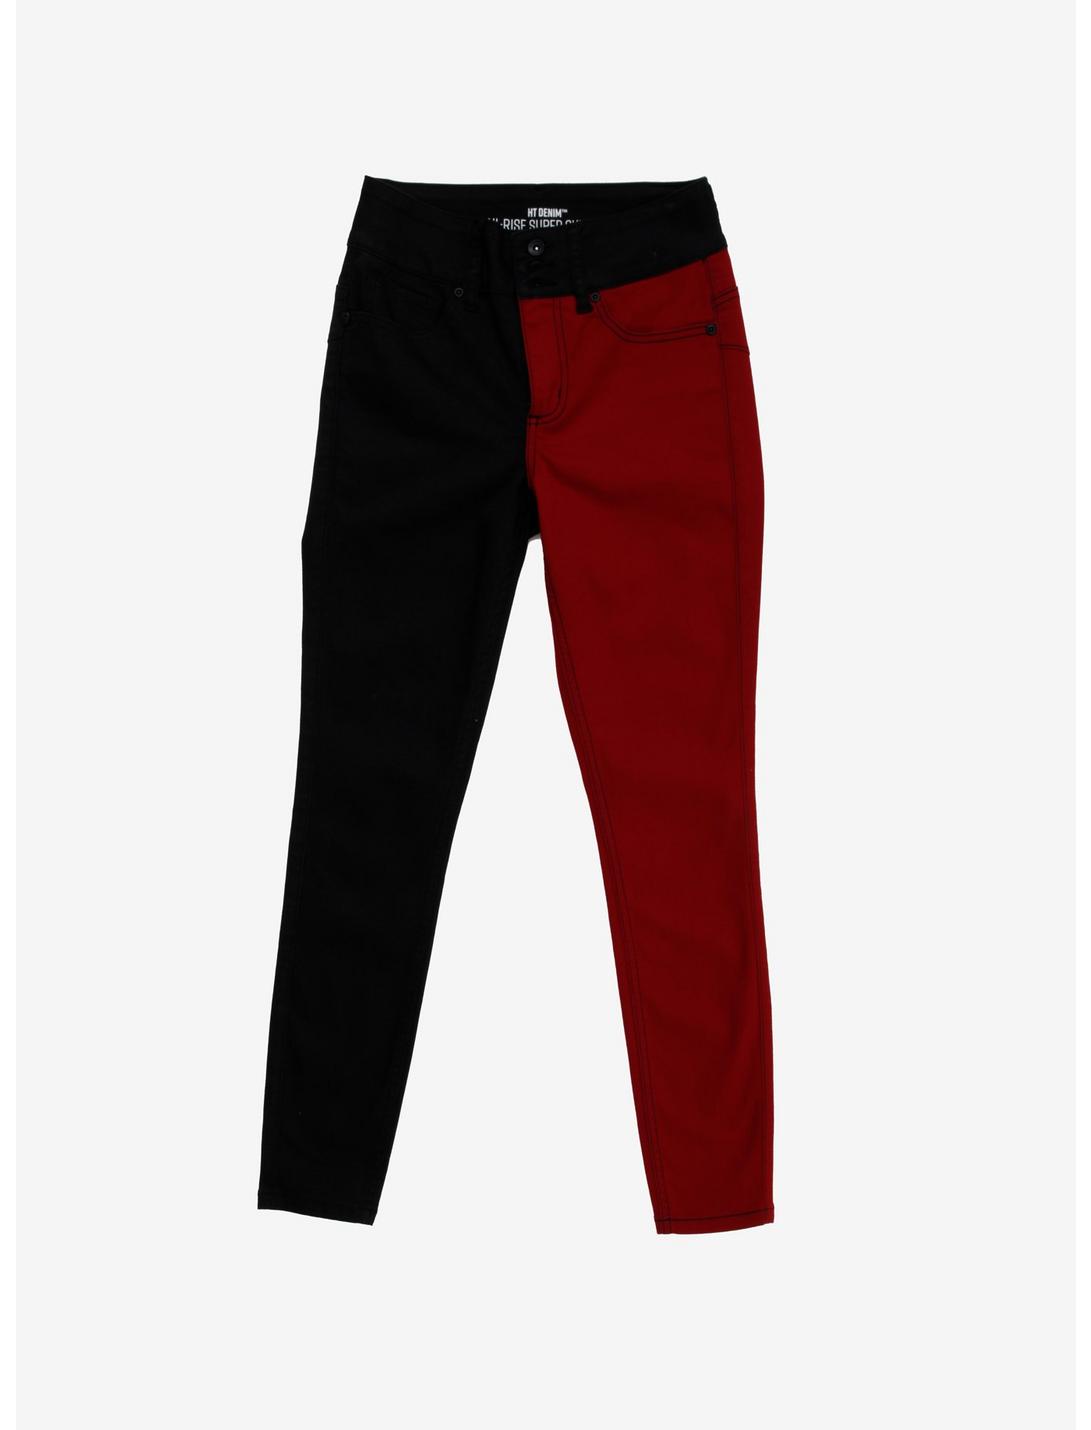 HT Denim Red & Black Split Leg Hi-Rise Super Skinny Jeans, MULTI, hi-res